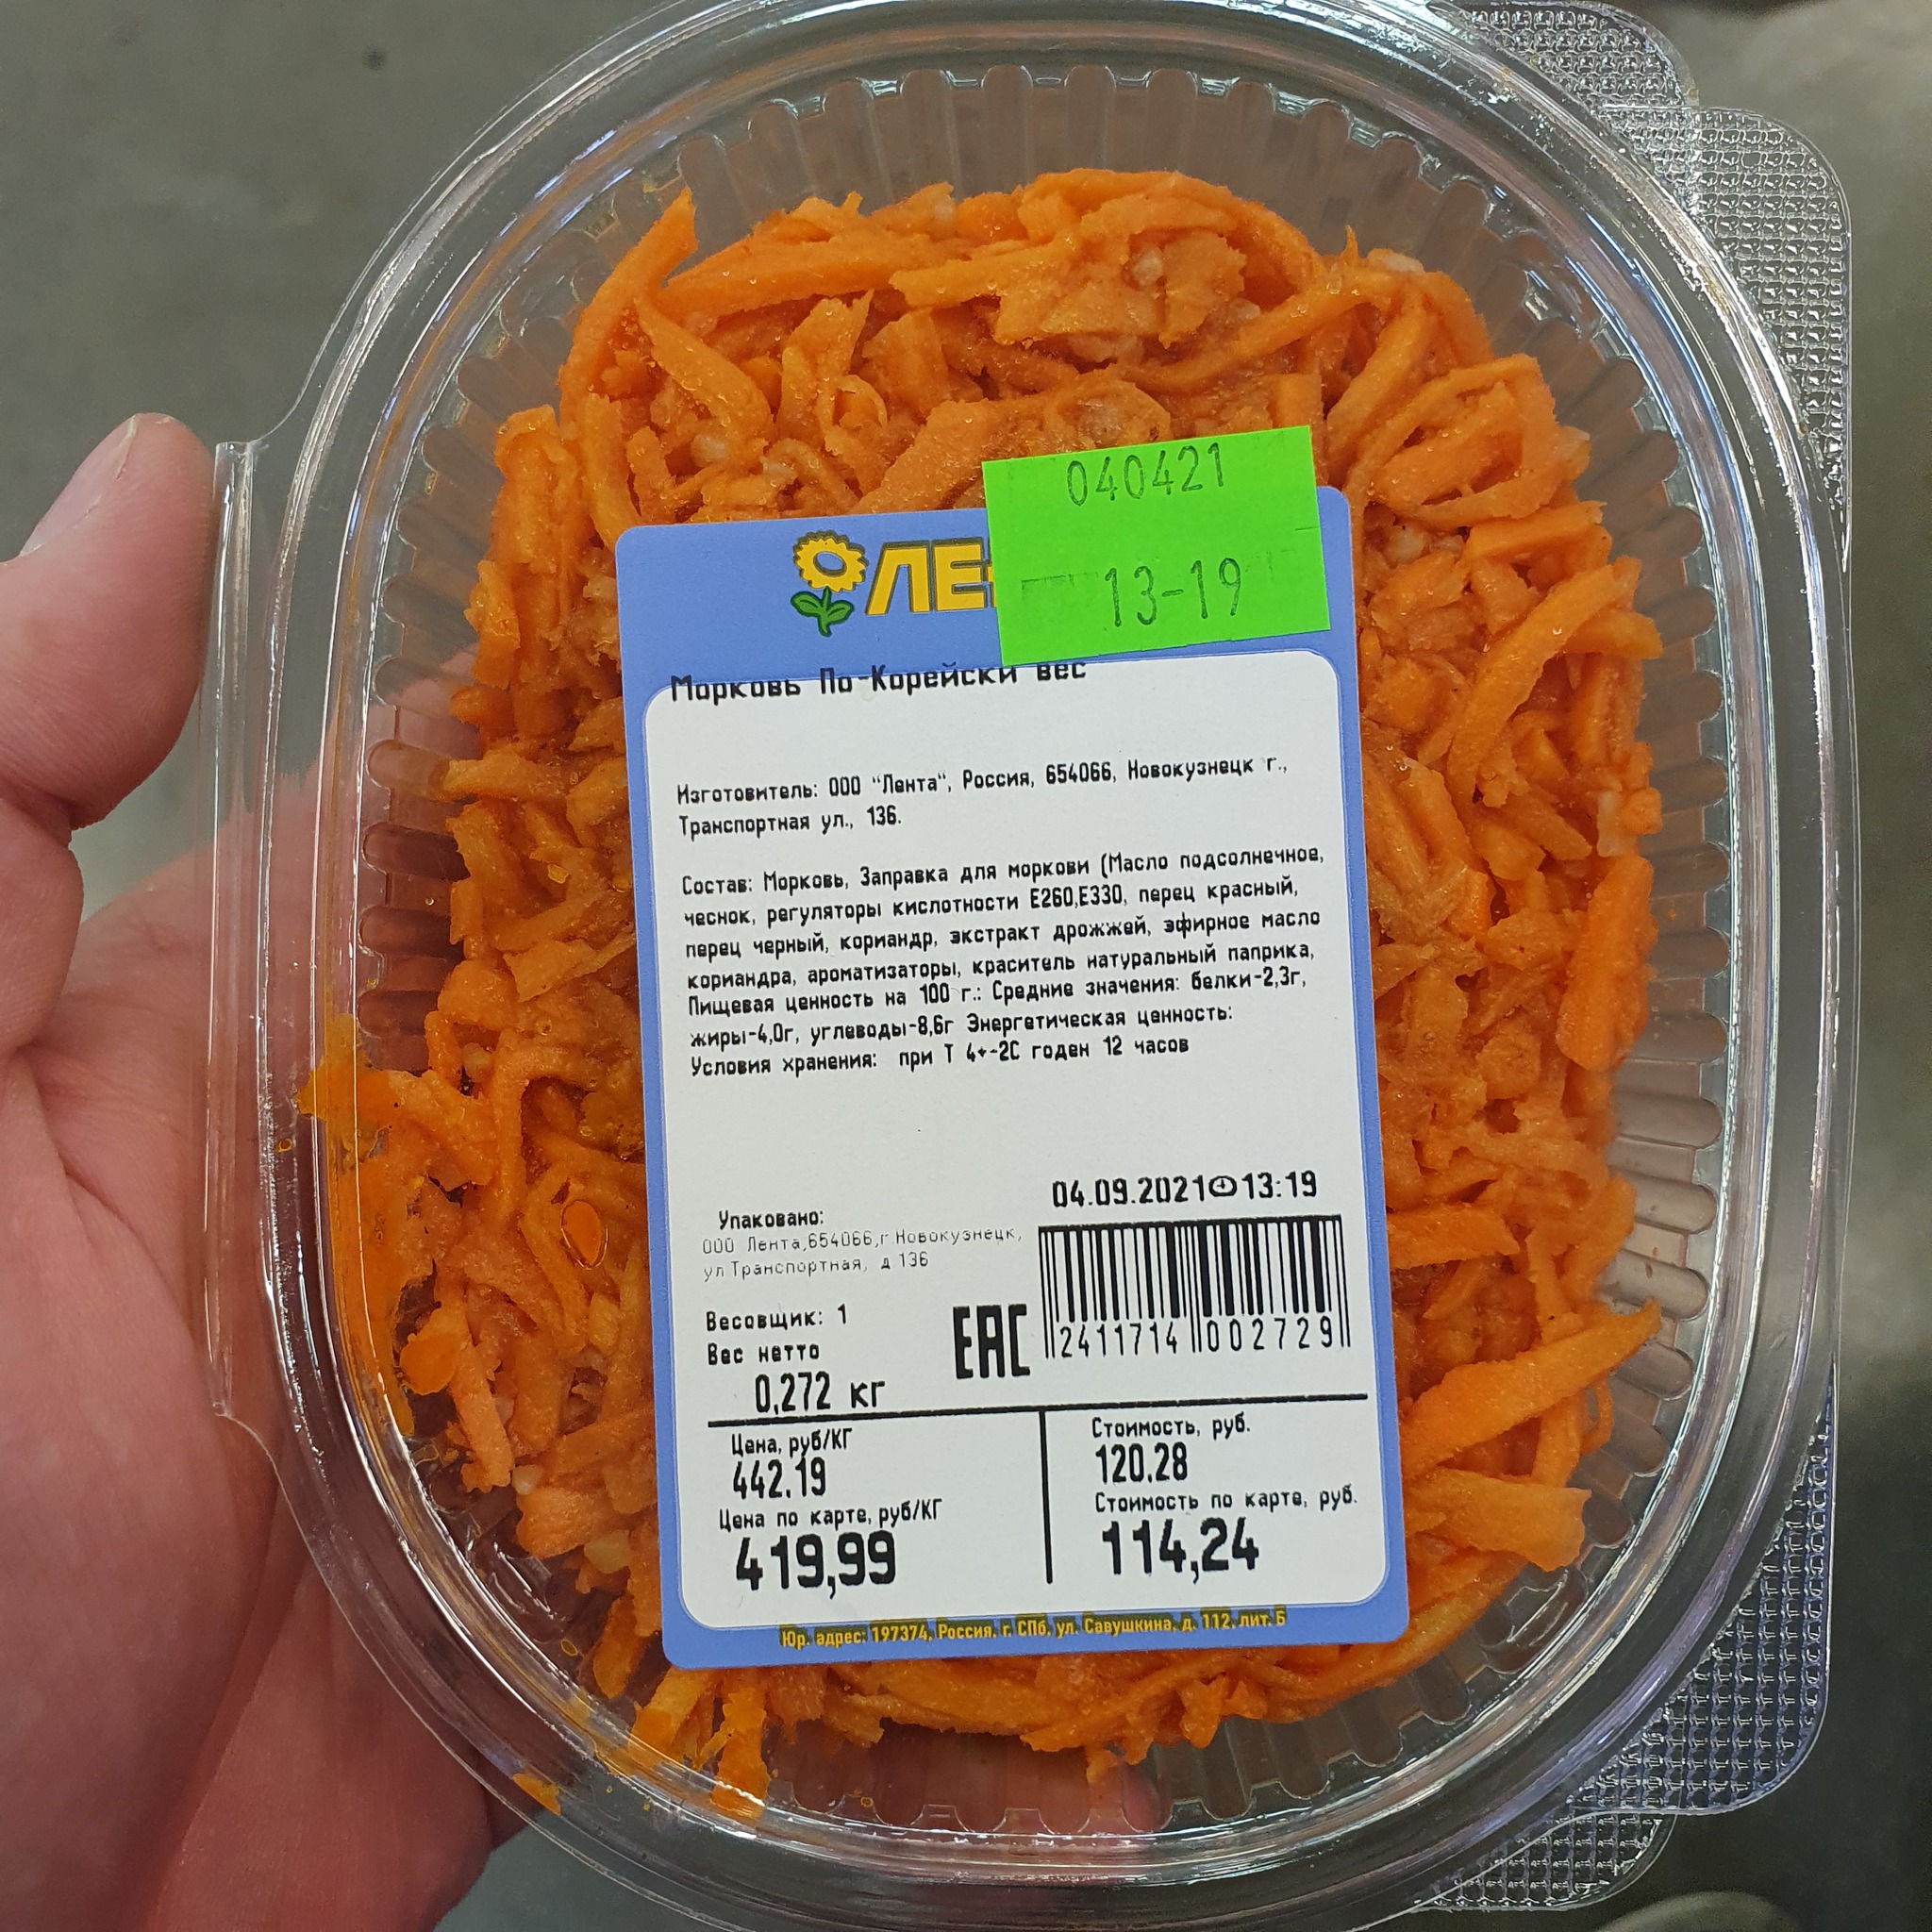 Сколько 100 по корейски. Морковь по корейски лента. Морковь по корейски в упаковке. Корейская морковь лента. Морковка по корейски лента.